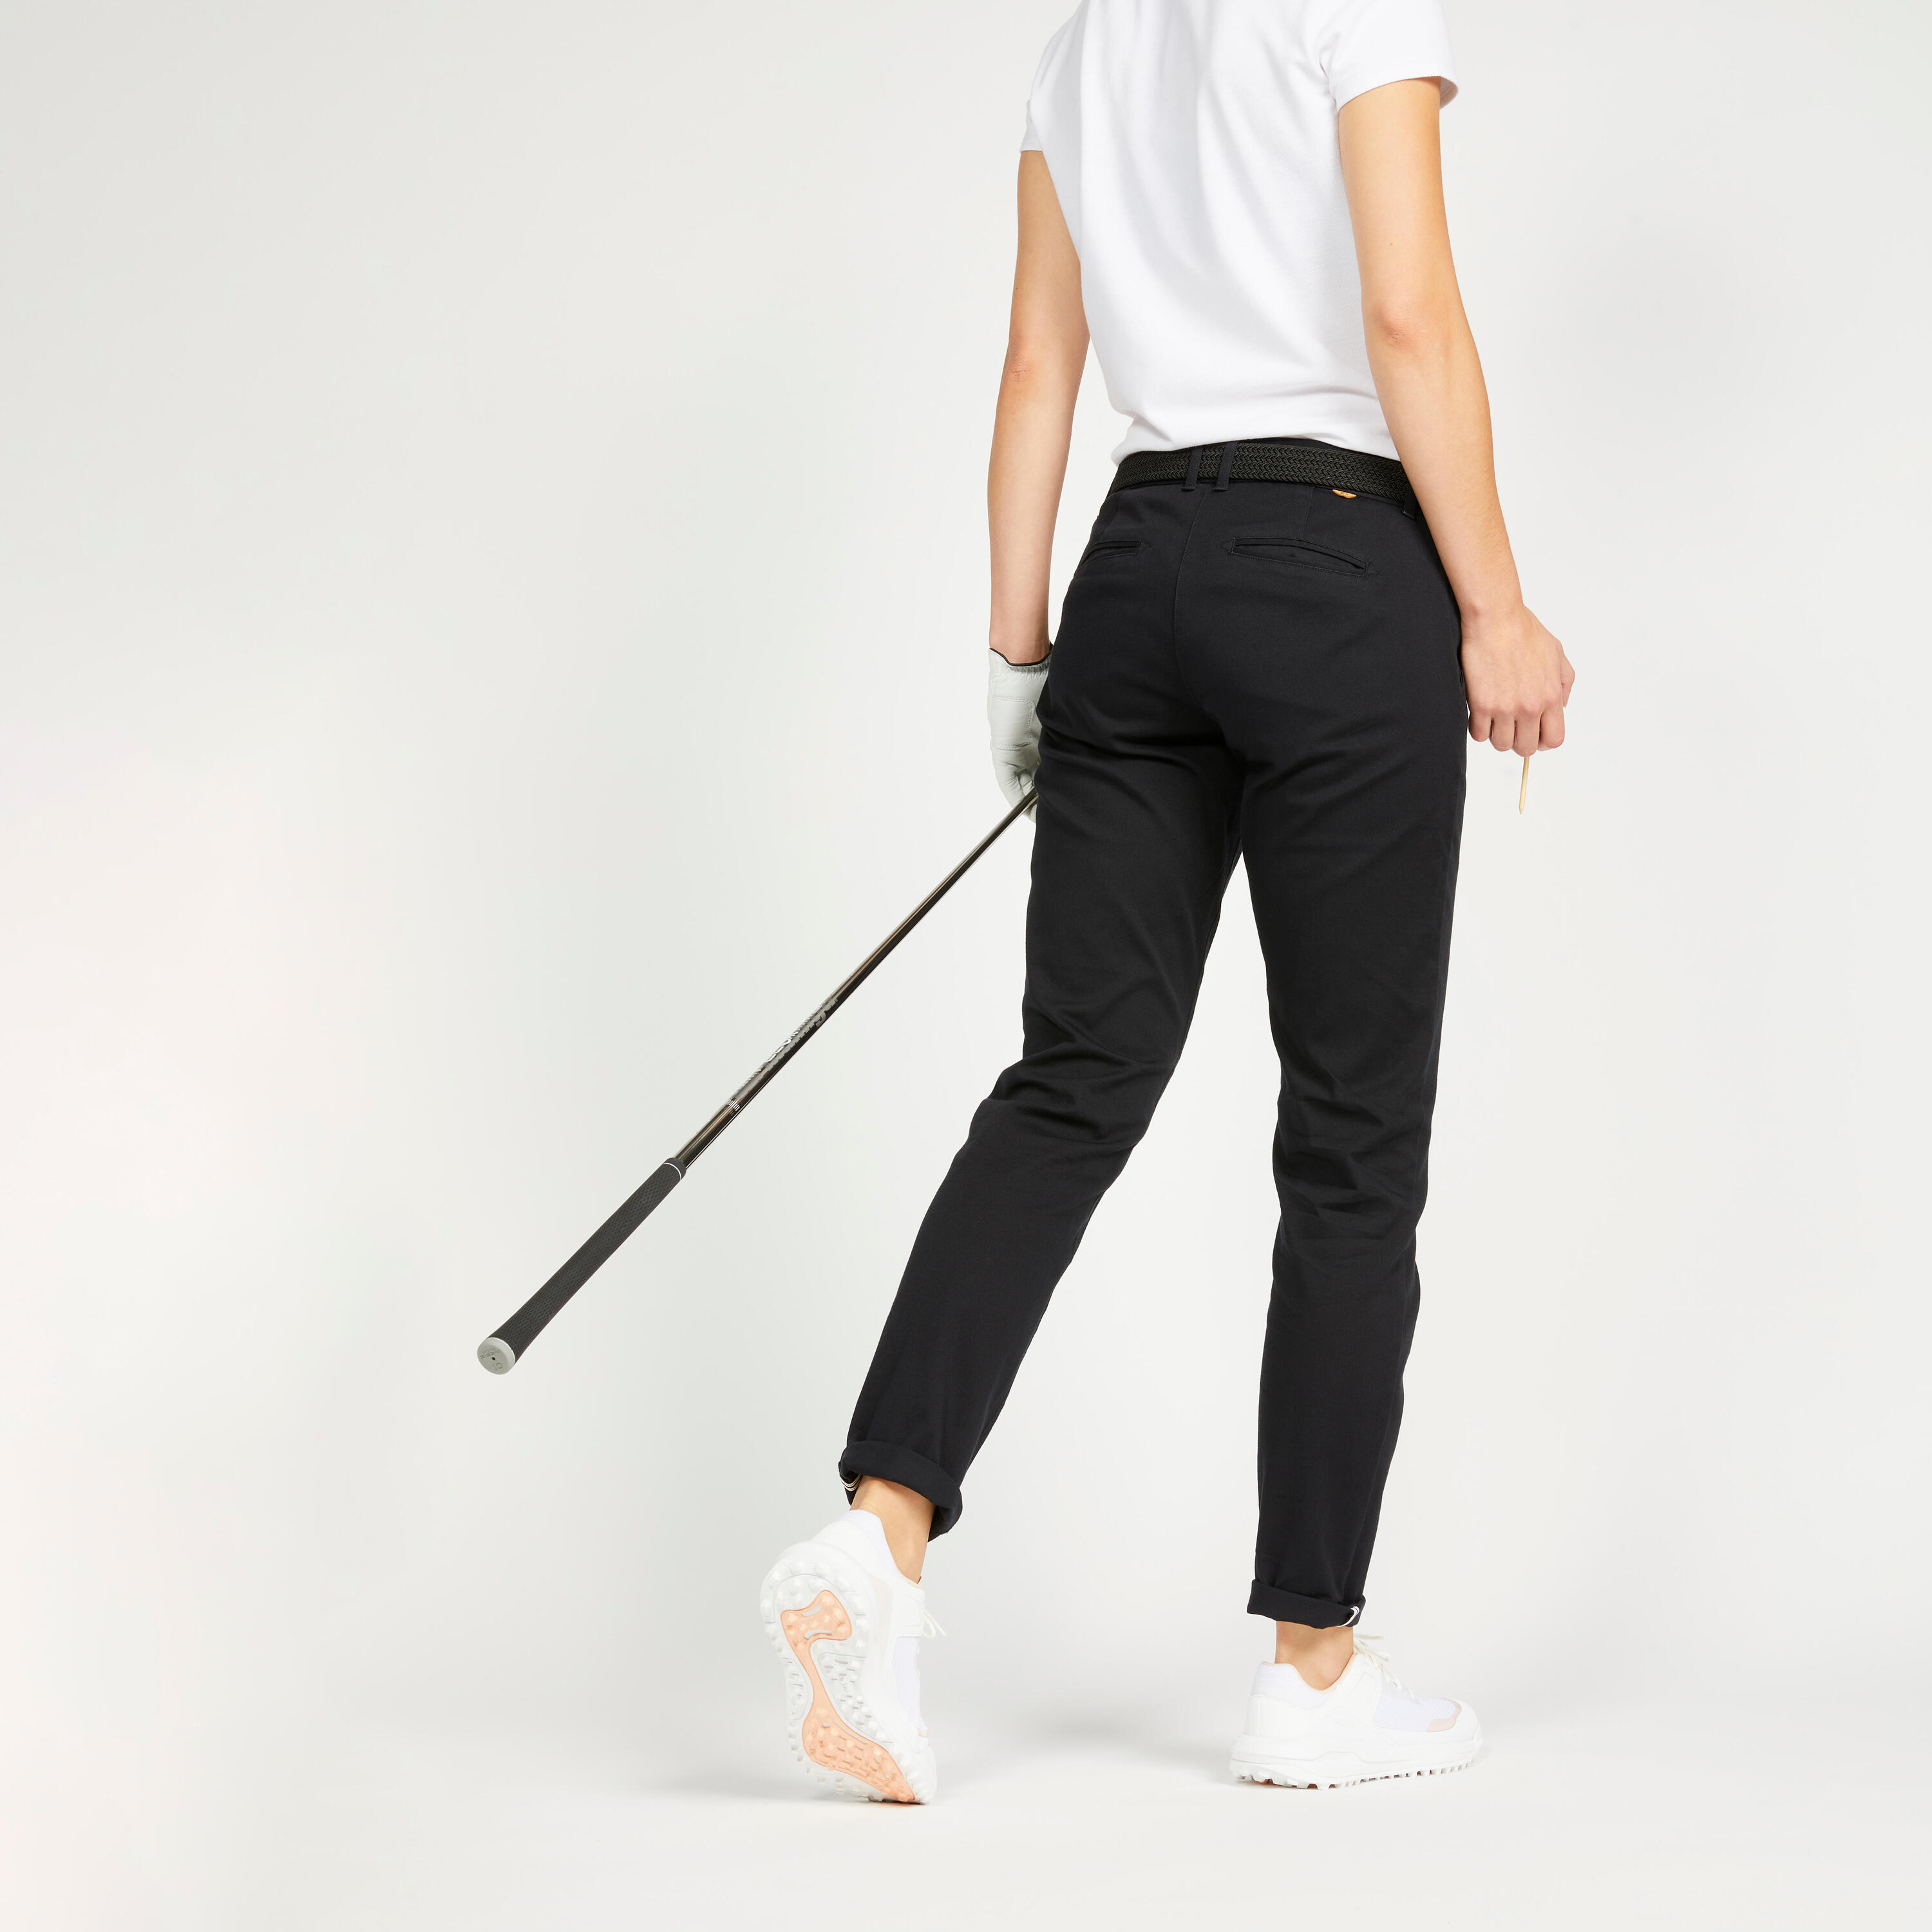 Women's Golf Trousers - MW500 Black 2/6